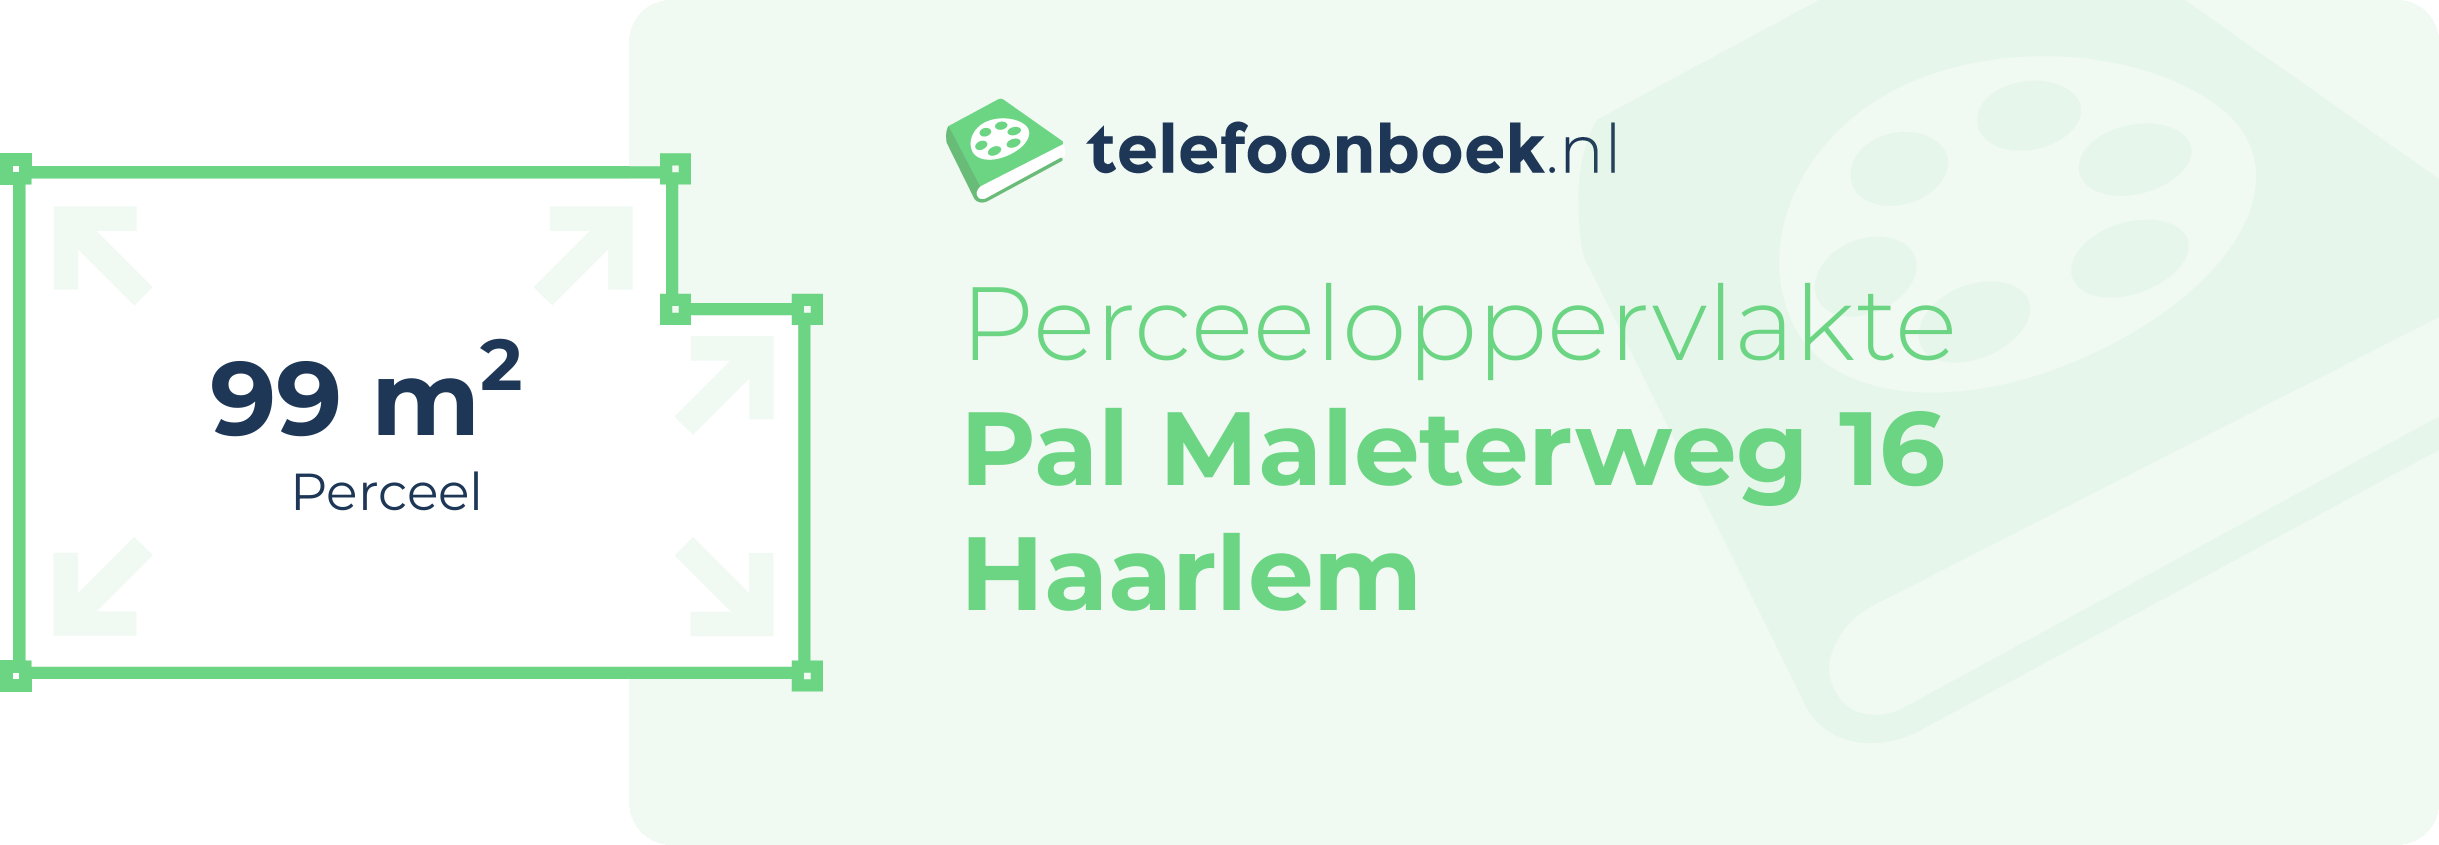 Perceeloppervlakte Pal Maleterweg 16 Haarlem